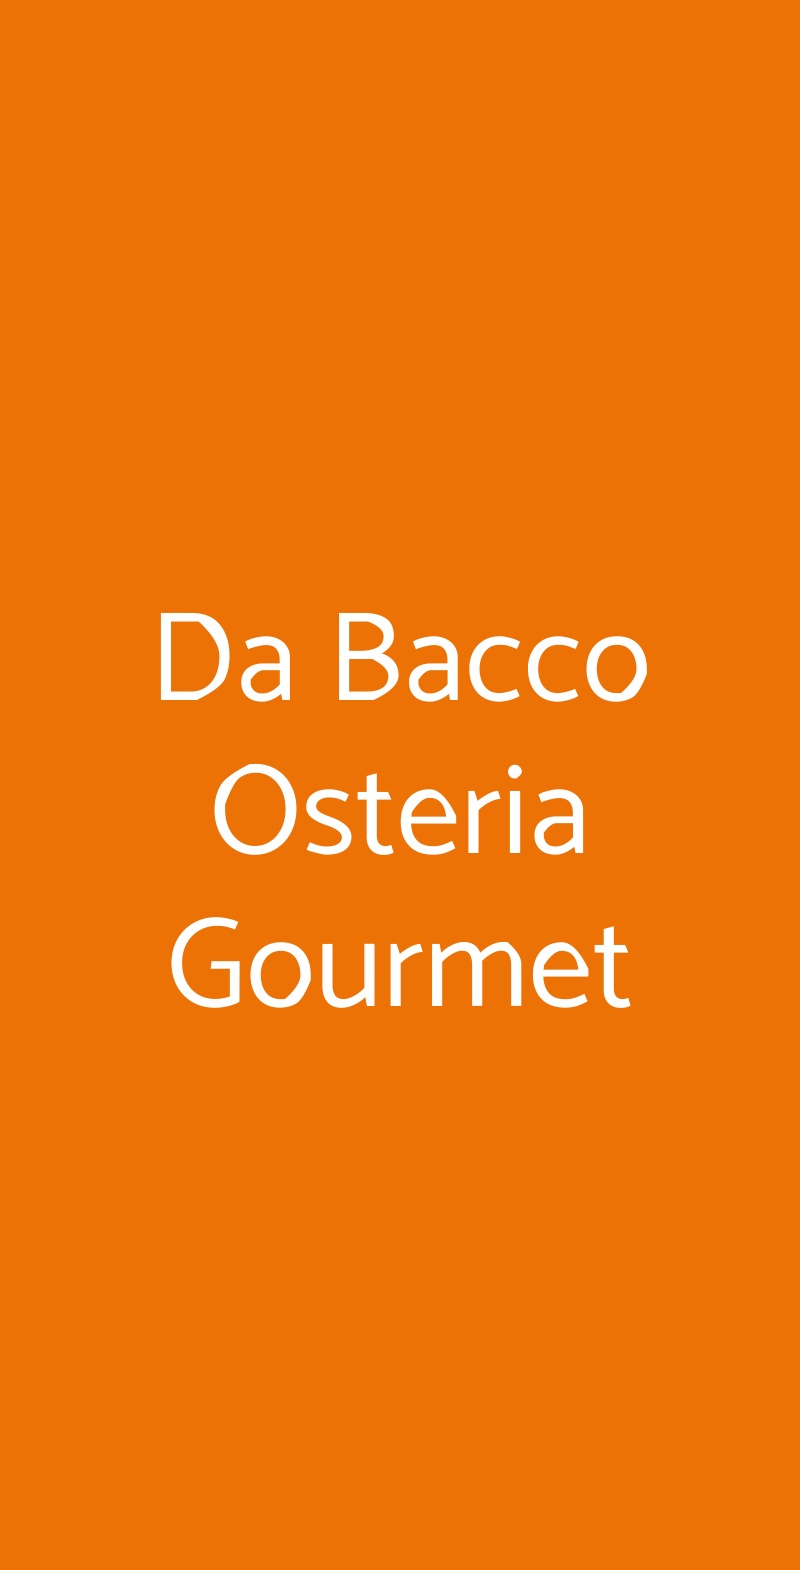 Da Bacco Osteria Gourmet Monza menù 1 pagina